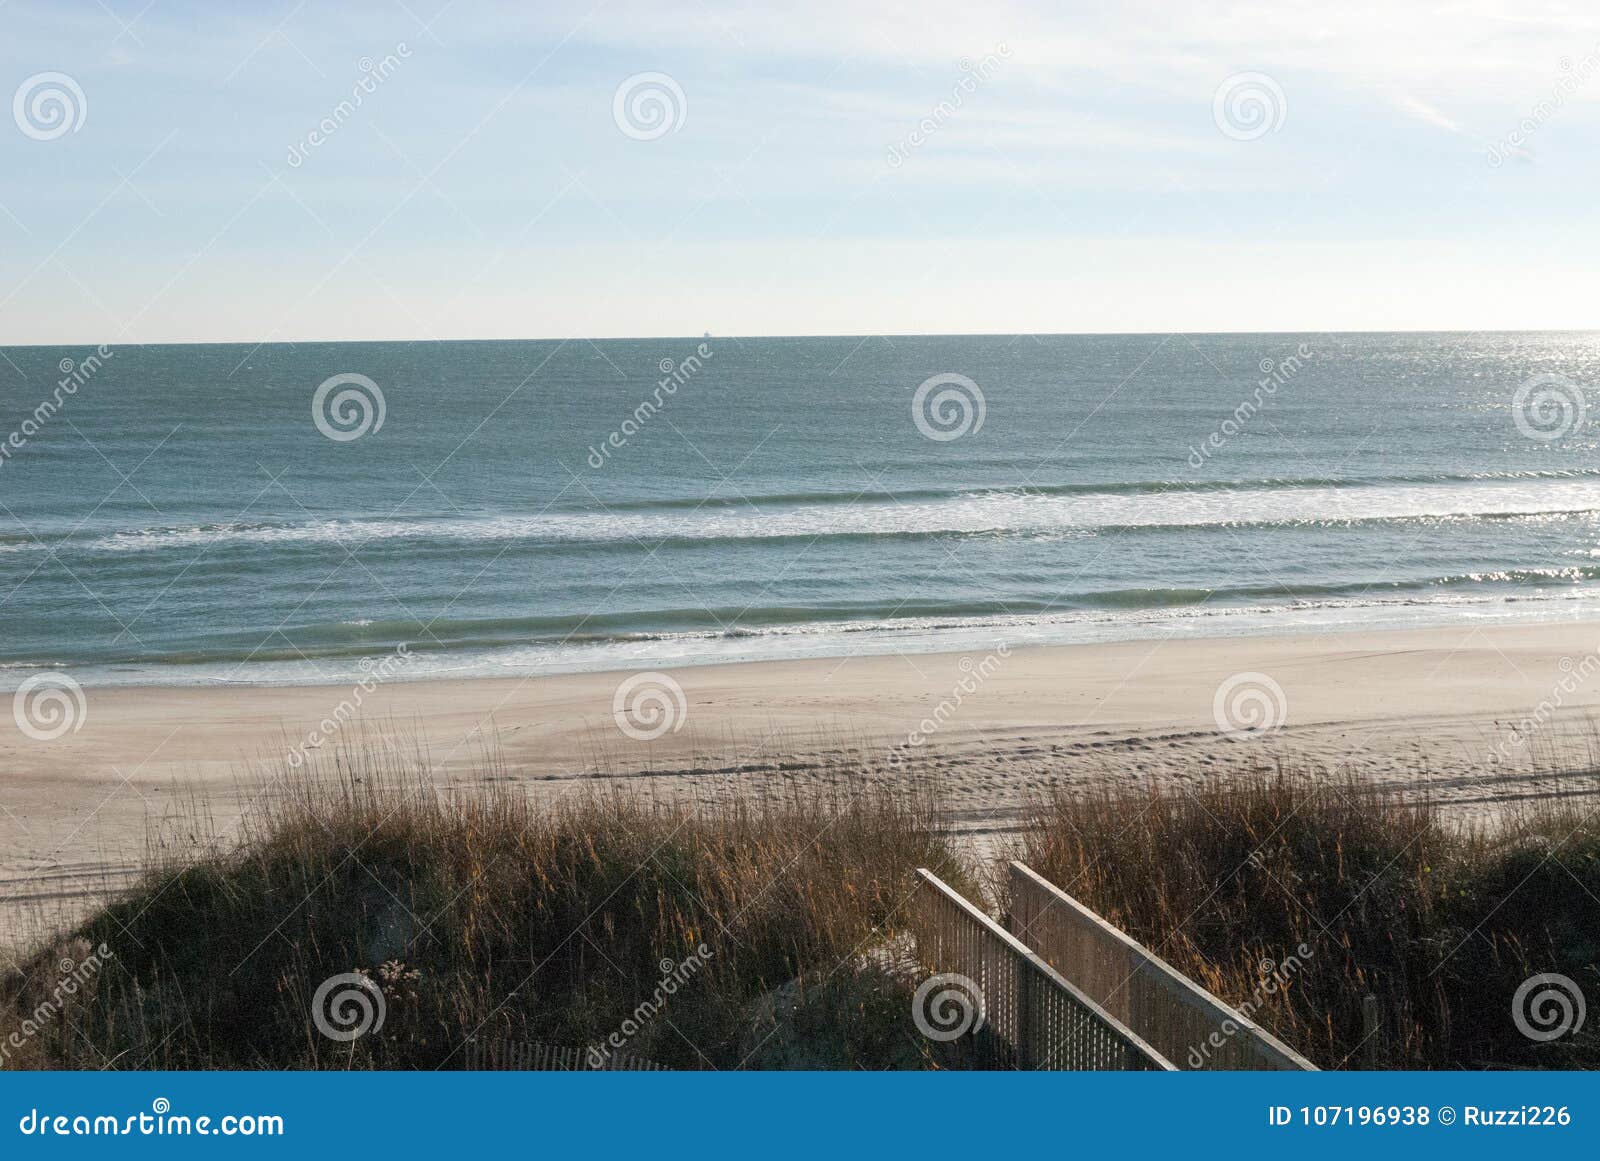 A Private Beach In North Carolina Stock Photo Image Of High